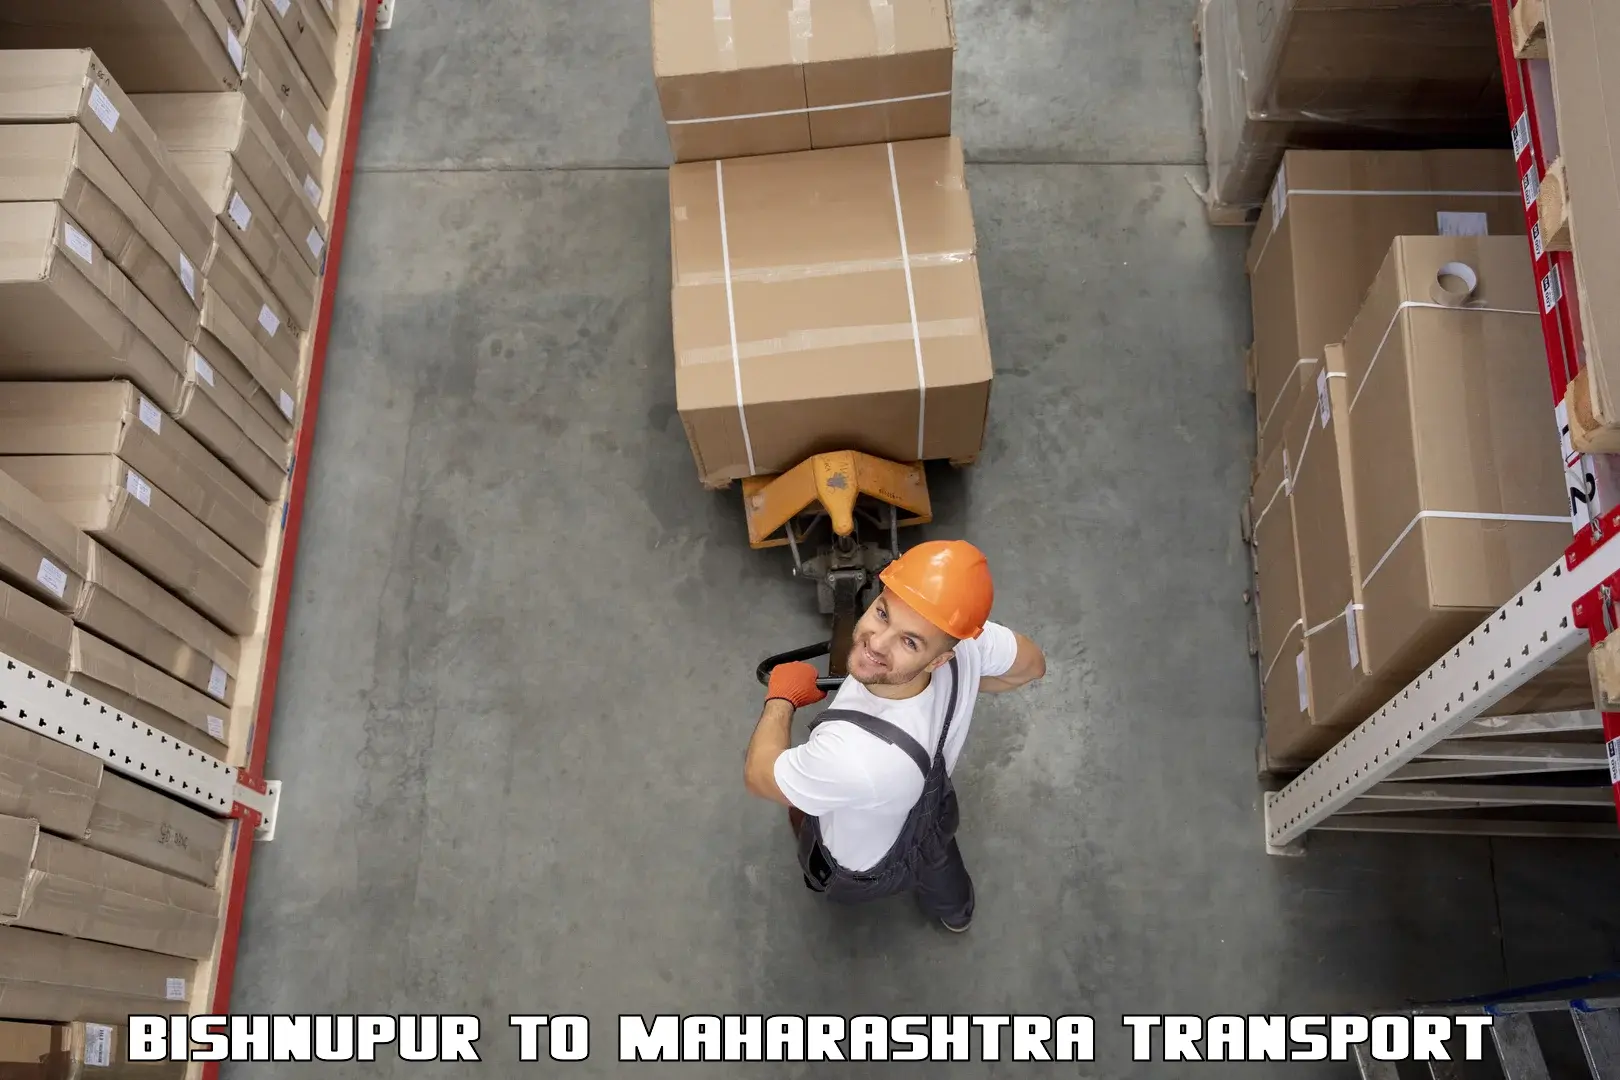 Truck transport companies in India Bishnupur to Kalbadevi